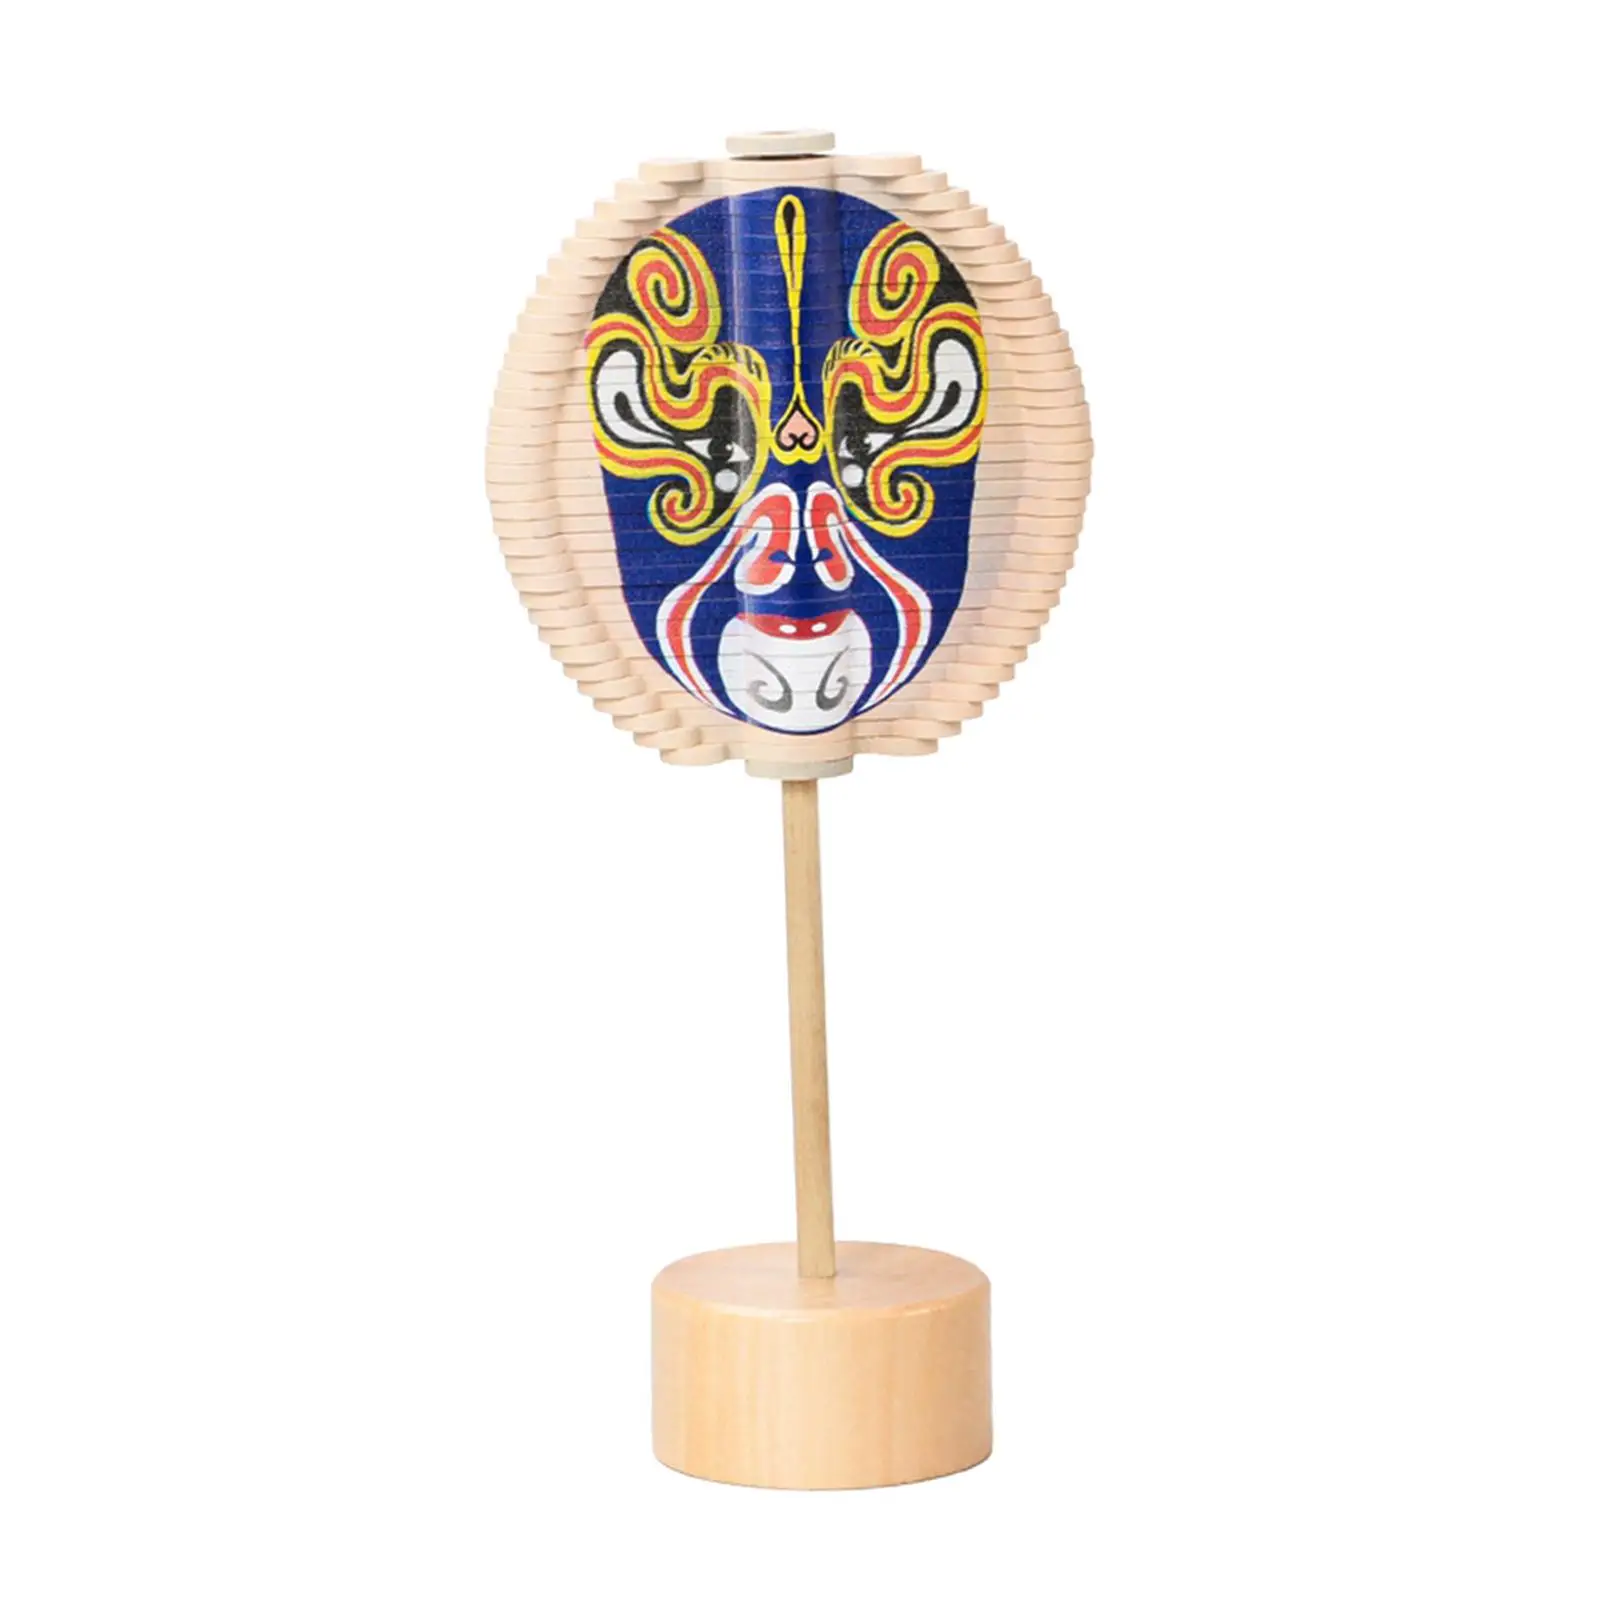 Wooden Rotating Spiral Lollipop Desktop Decoration Gadget for Party Favors